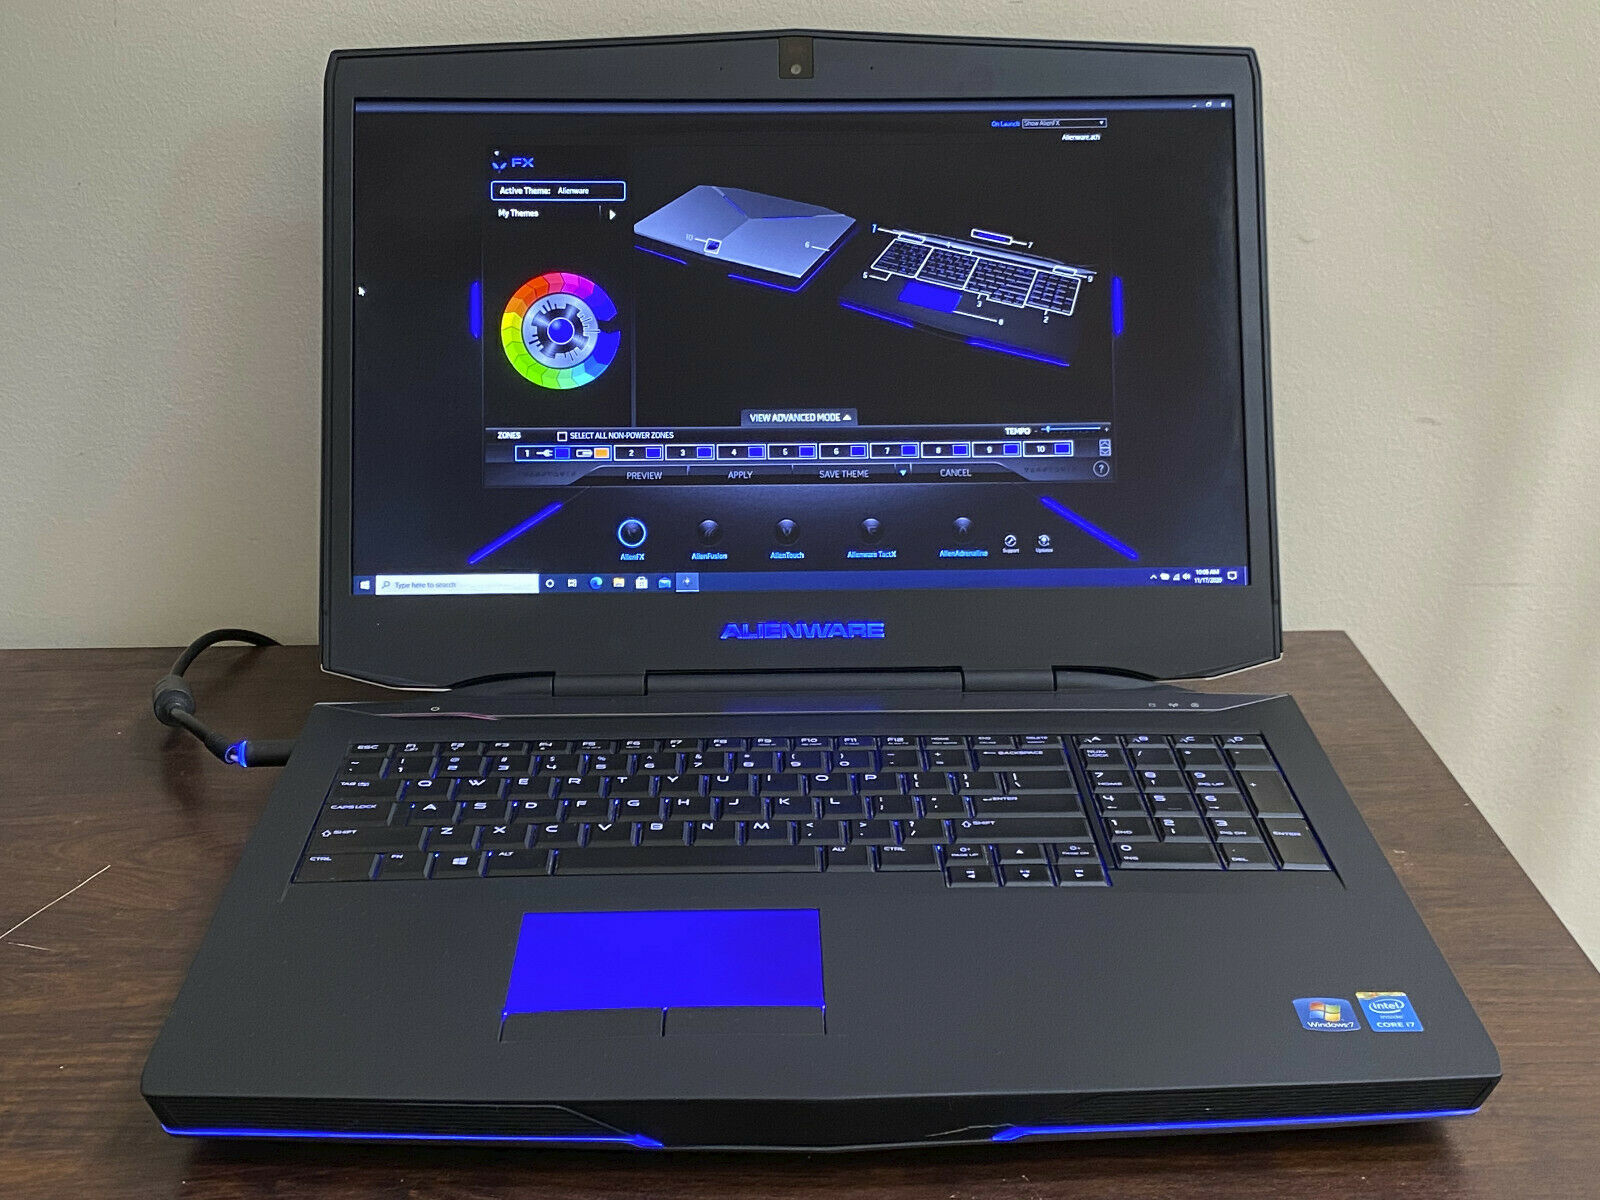 Alienware 17 3D FHD i7-4710MQ 16GB 1TB/HDD 256GB/SSD GTX770M/3GB Gaming Laptop